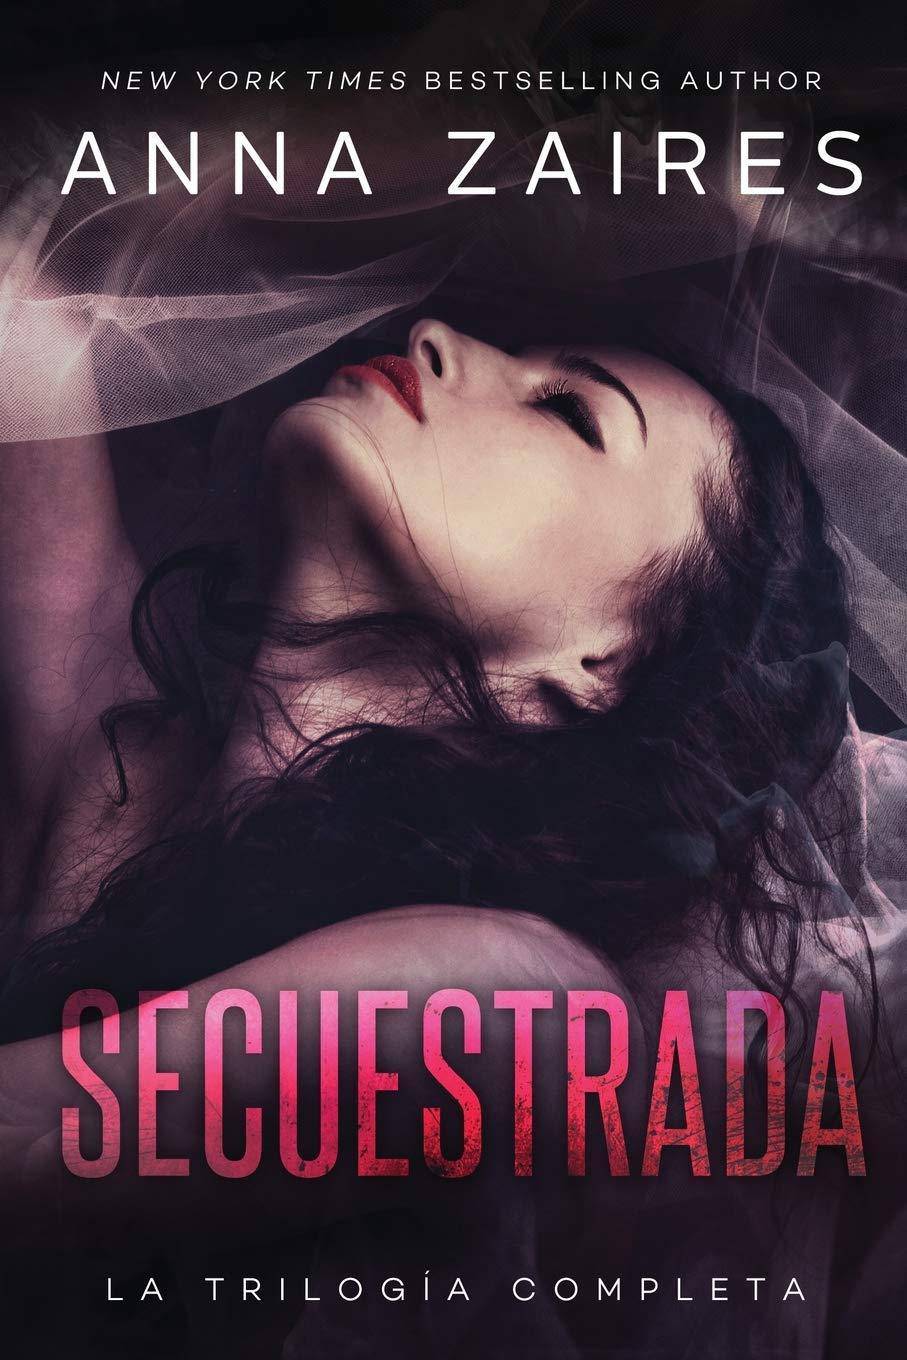 Secuestrada - SureShot Books Publishing LLC